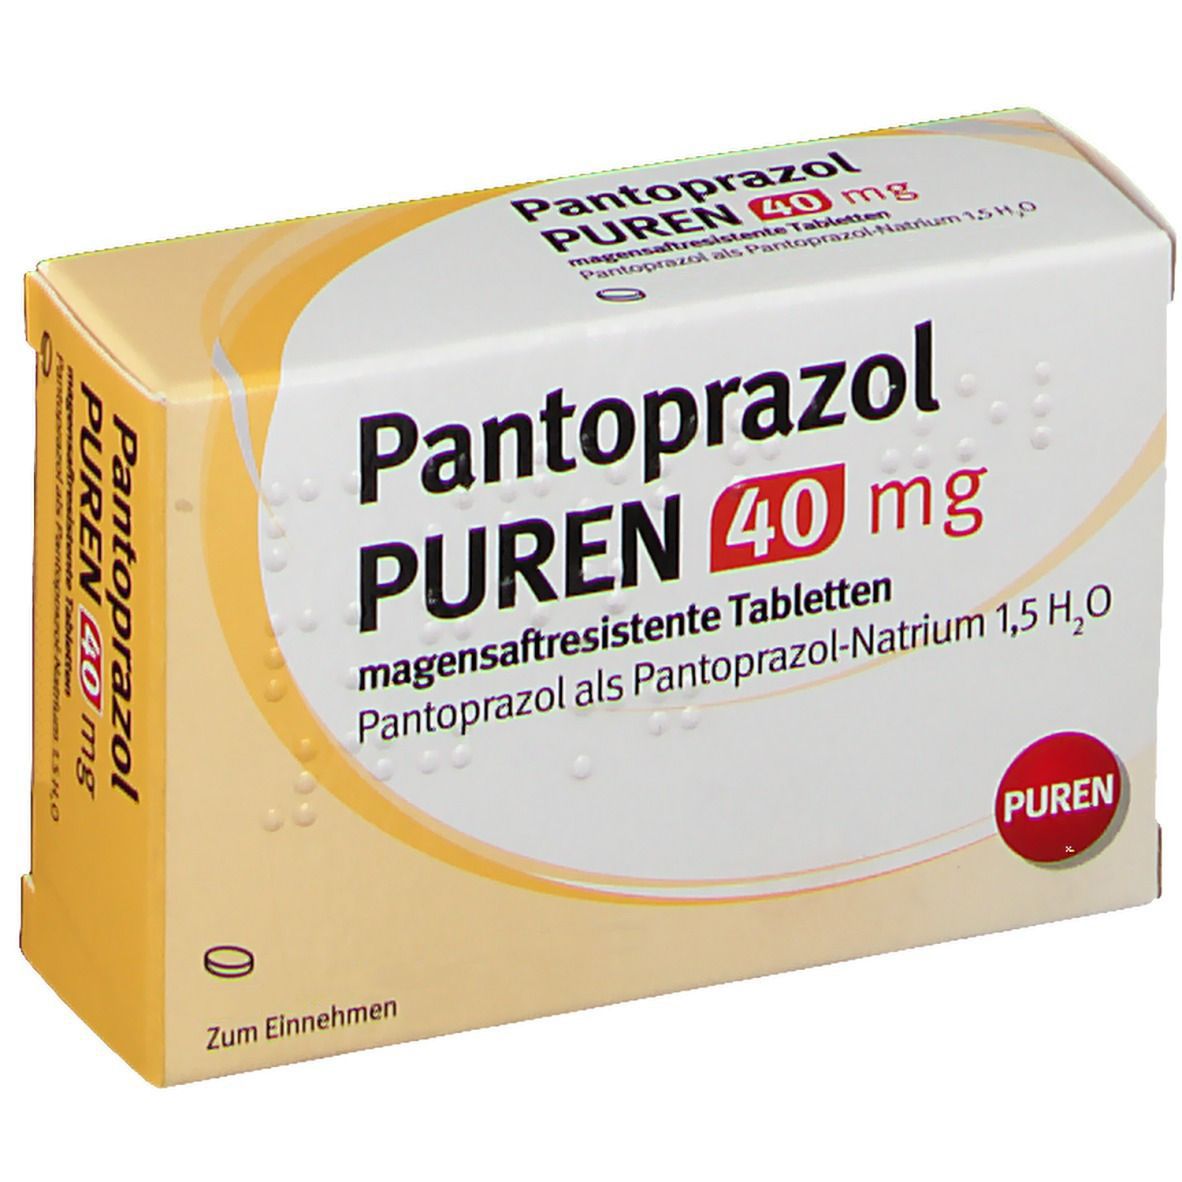 Pantoprazol PUREN 40 mg